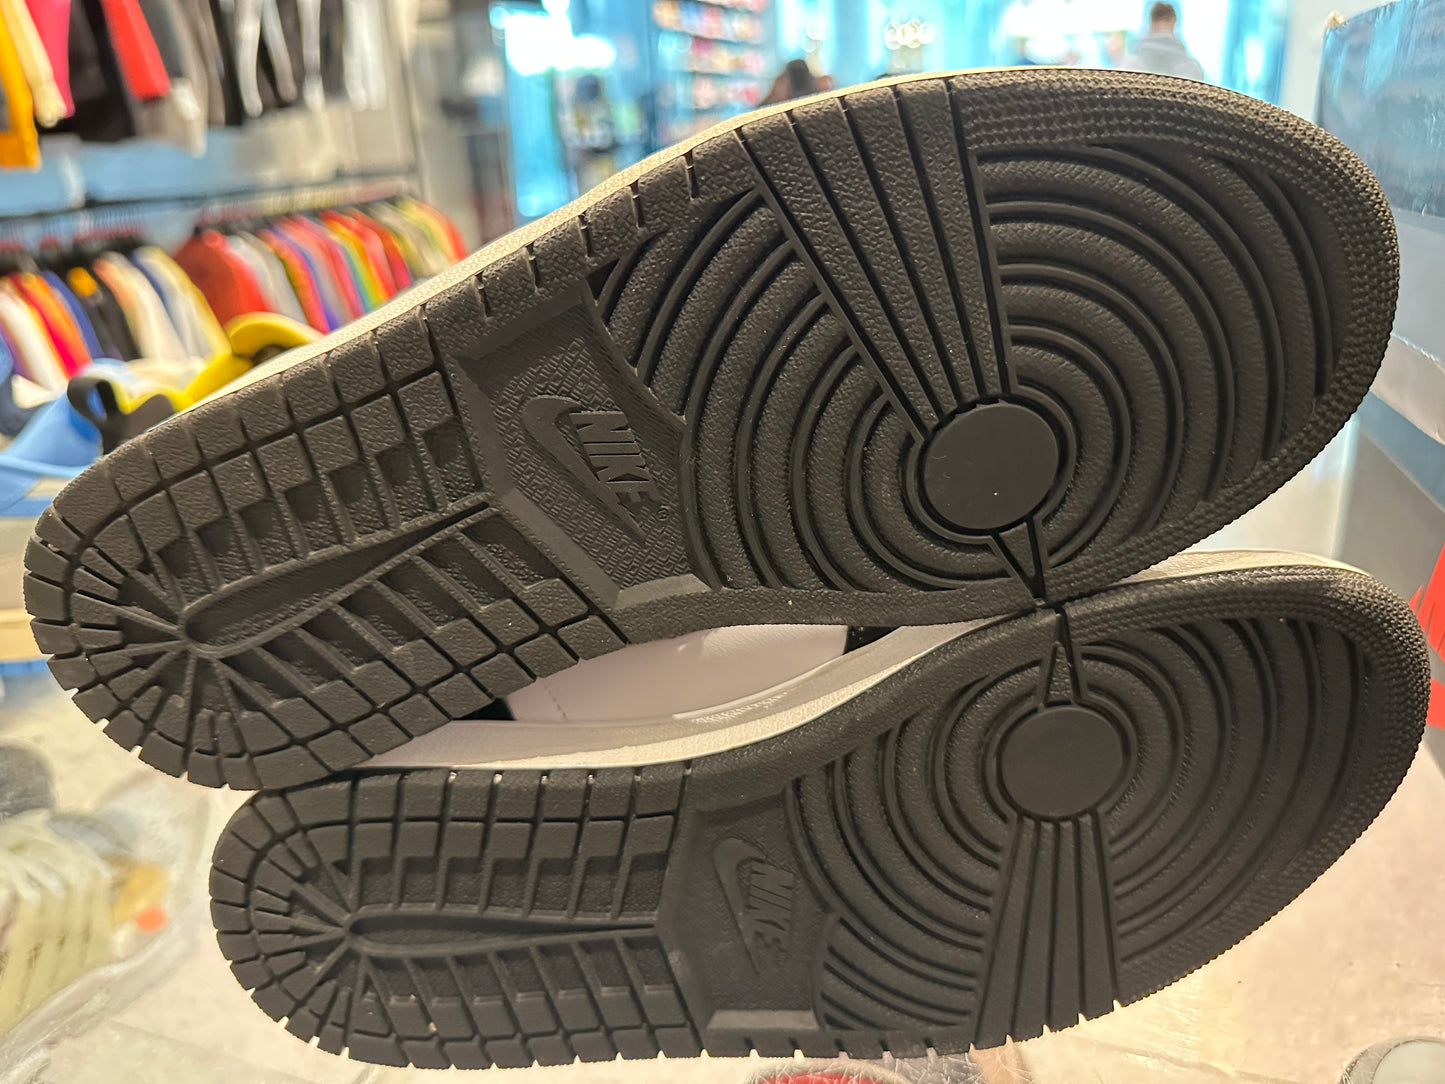 Size 9.5 Air Jordan 1 “ (Mall)